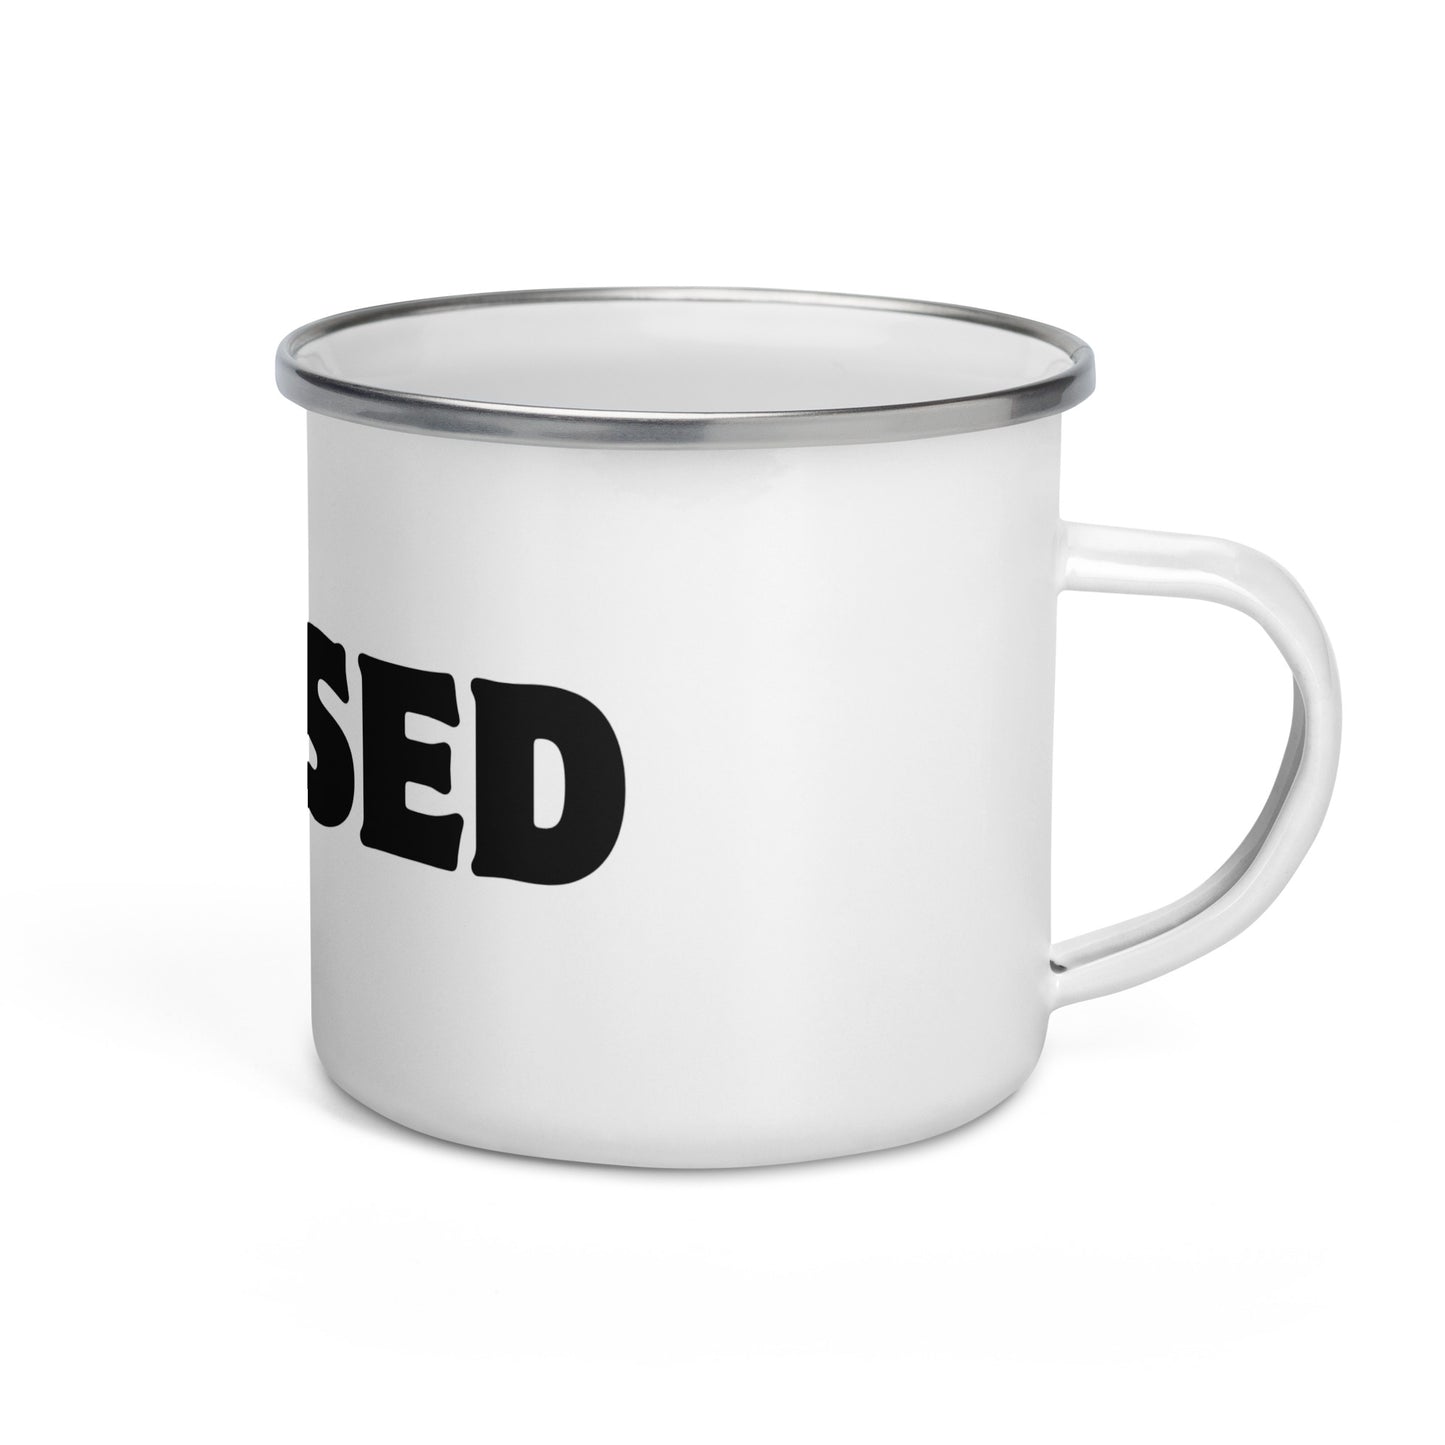 BLESSED - Enamel Mug